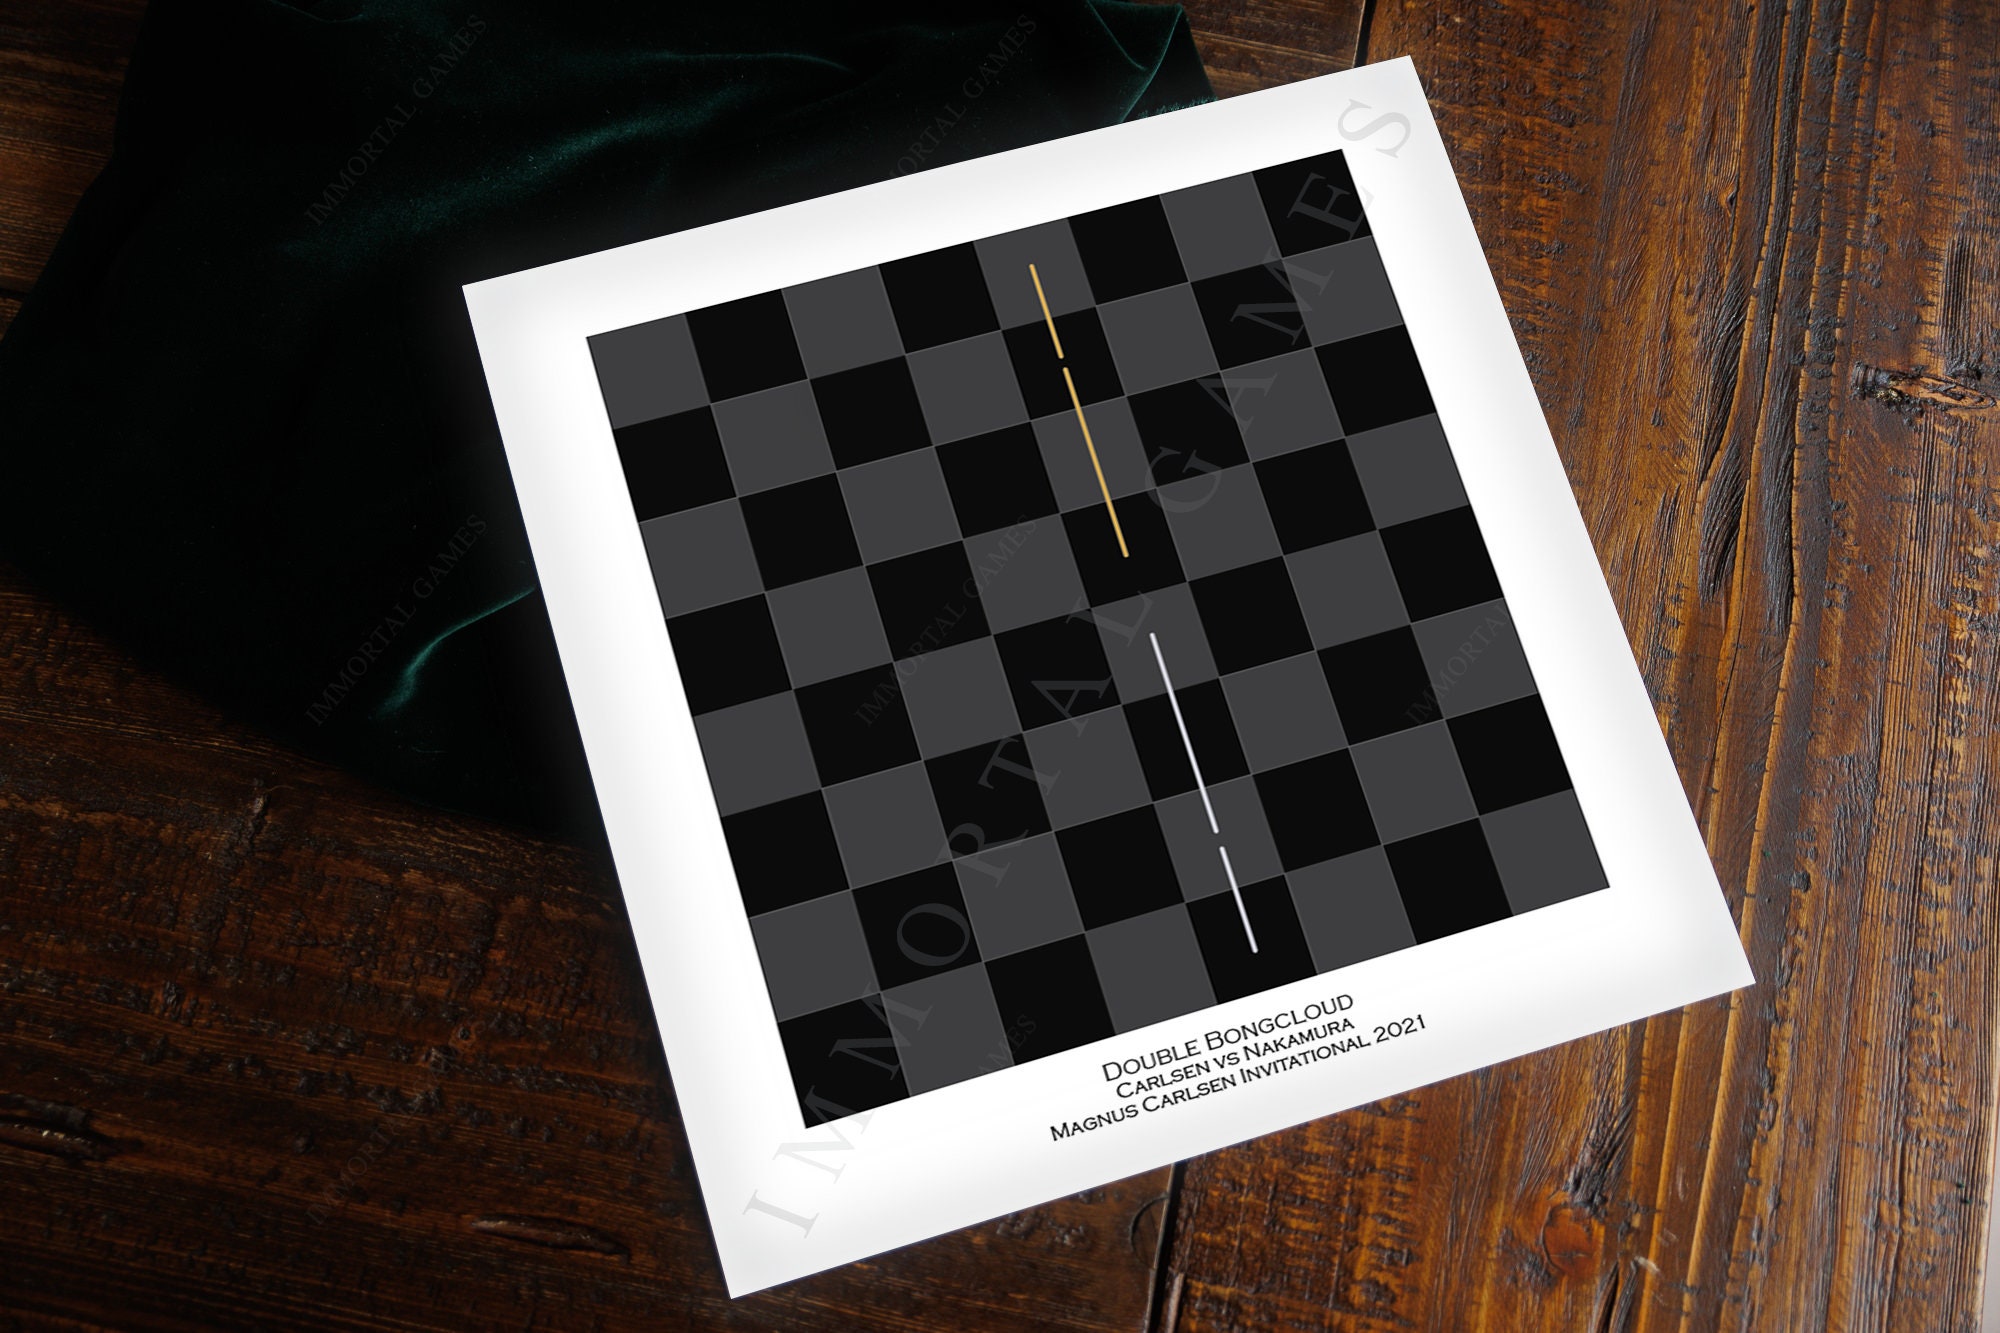 GM Hikaru Nakamura autographed chess board Twitter prize - Chess